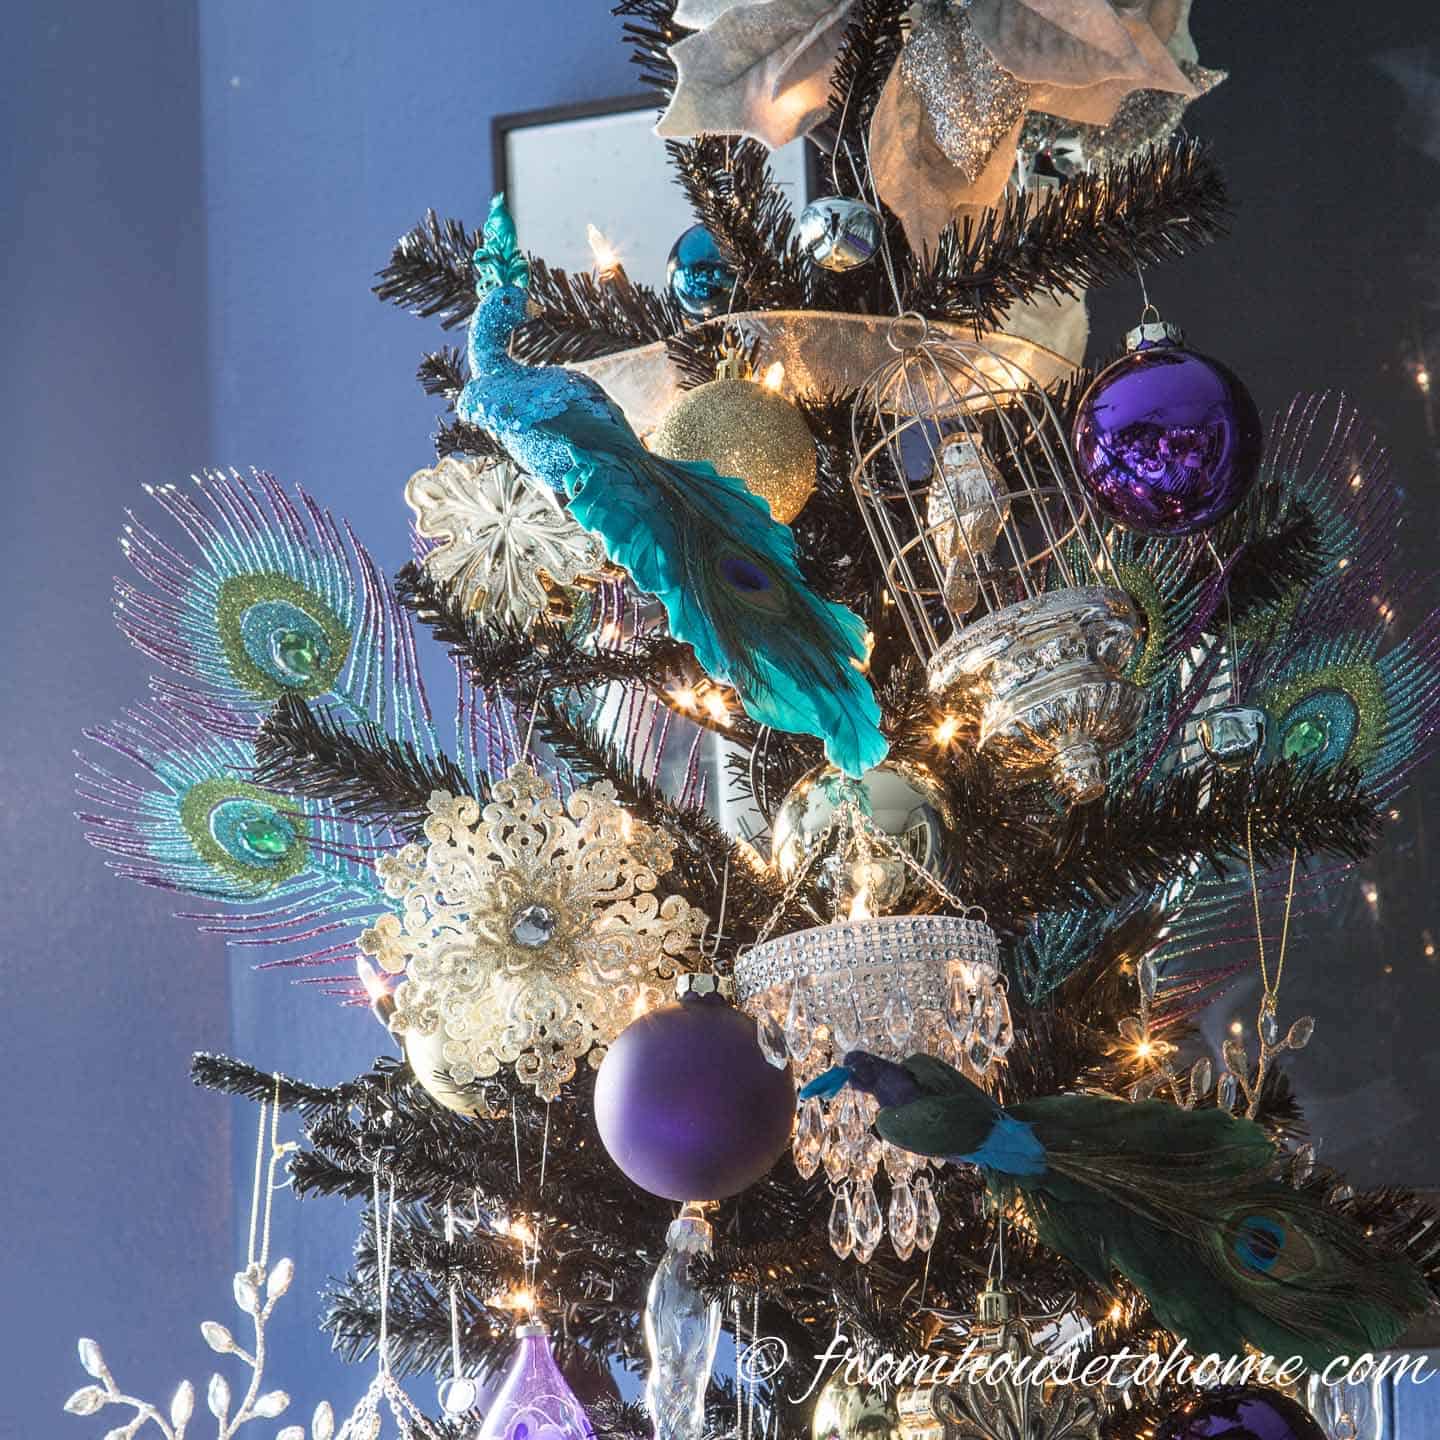 Peacock Christmas ornaments on a black Christmas tree